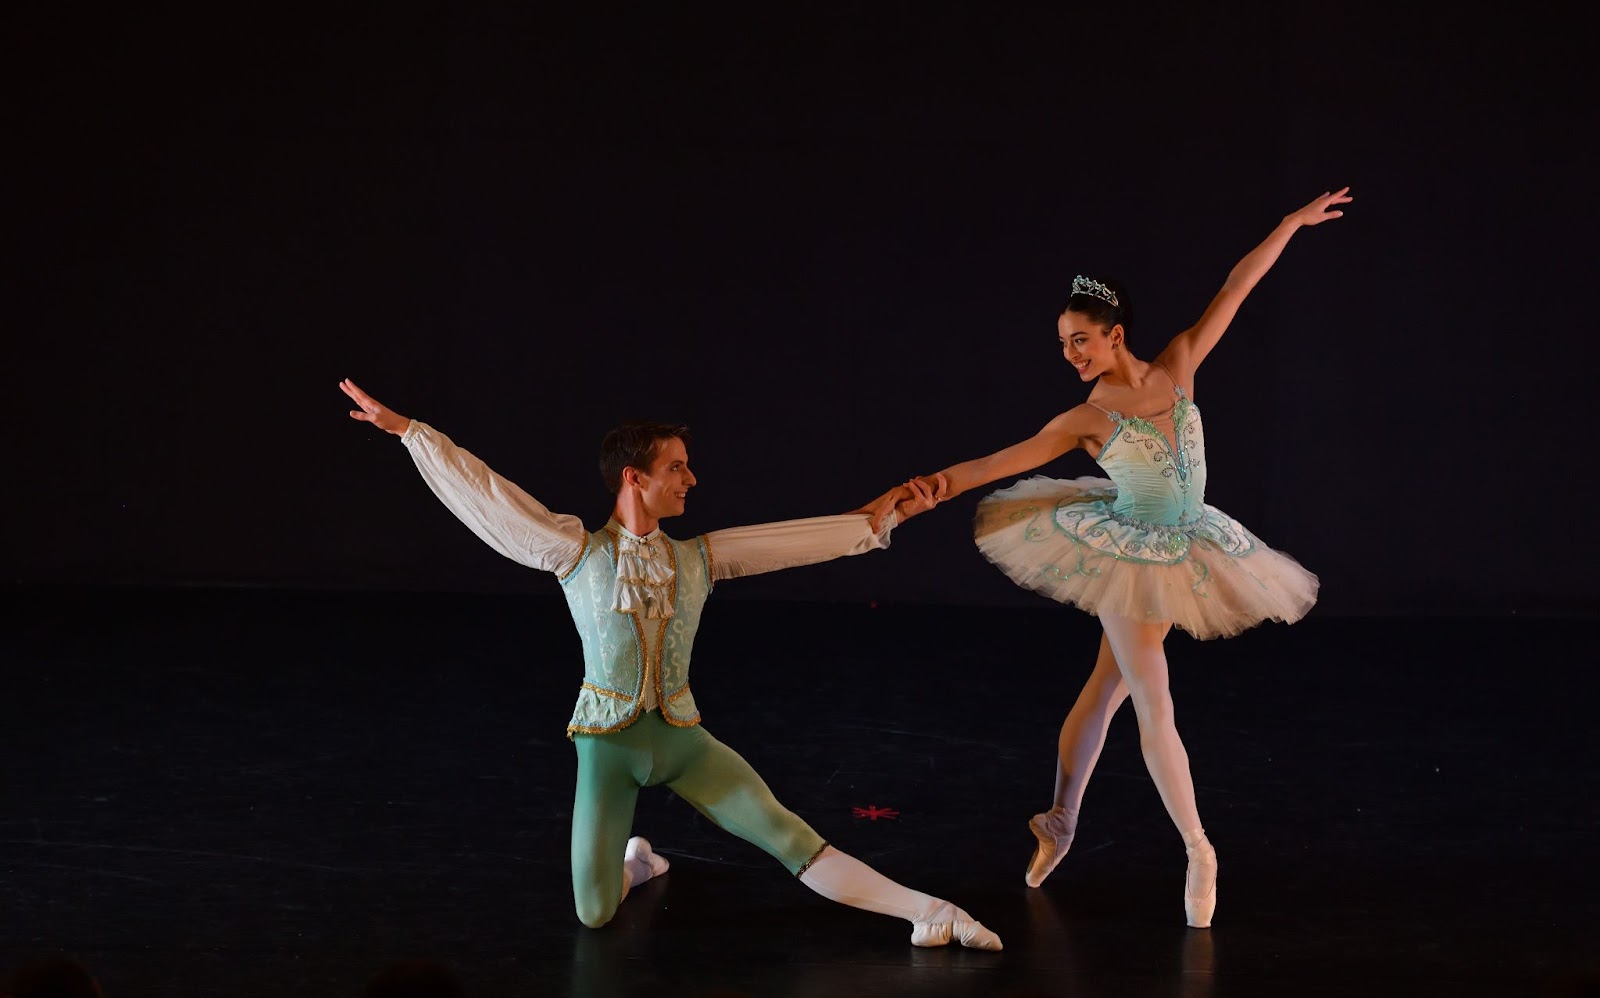 Balletto di Siena in Grecia per Tournée "The Great Pas de Deux" - Siena News